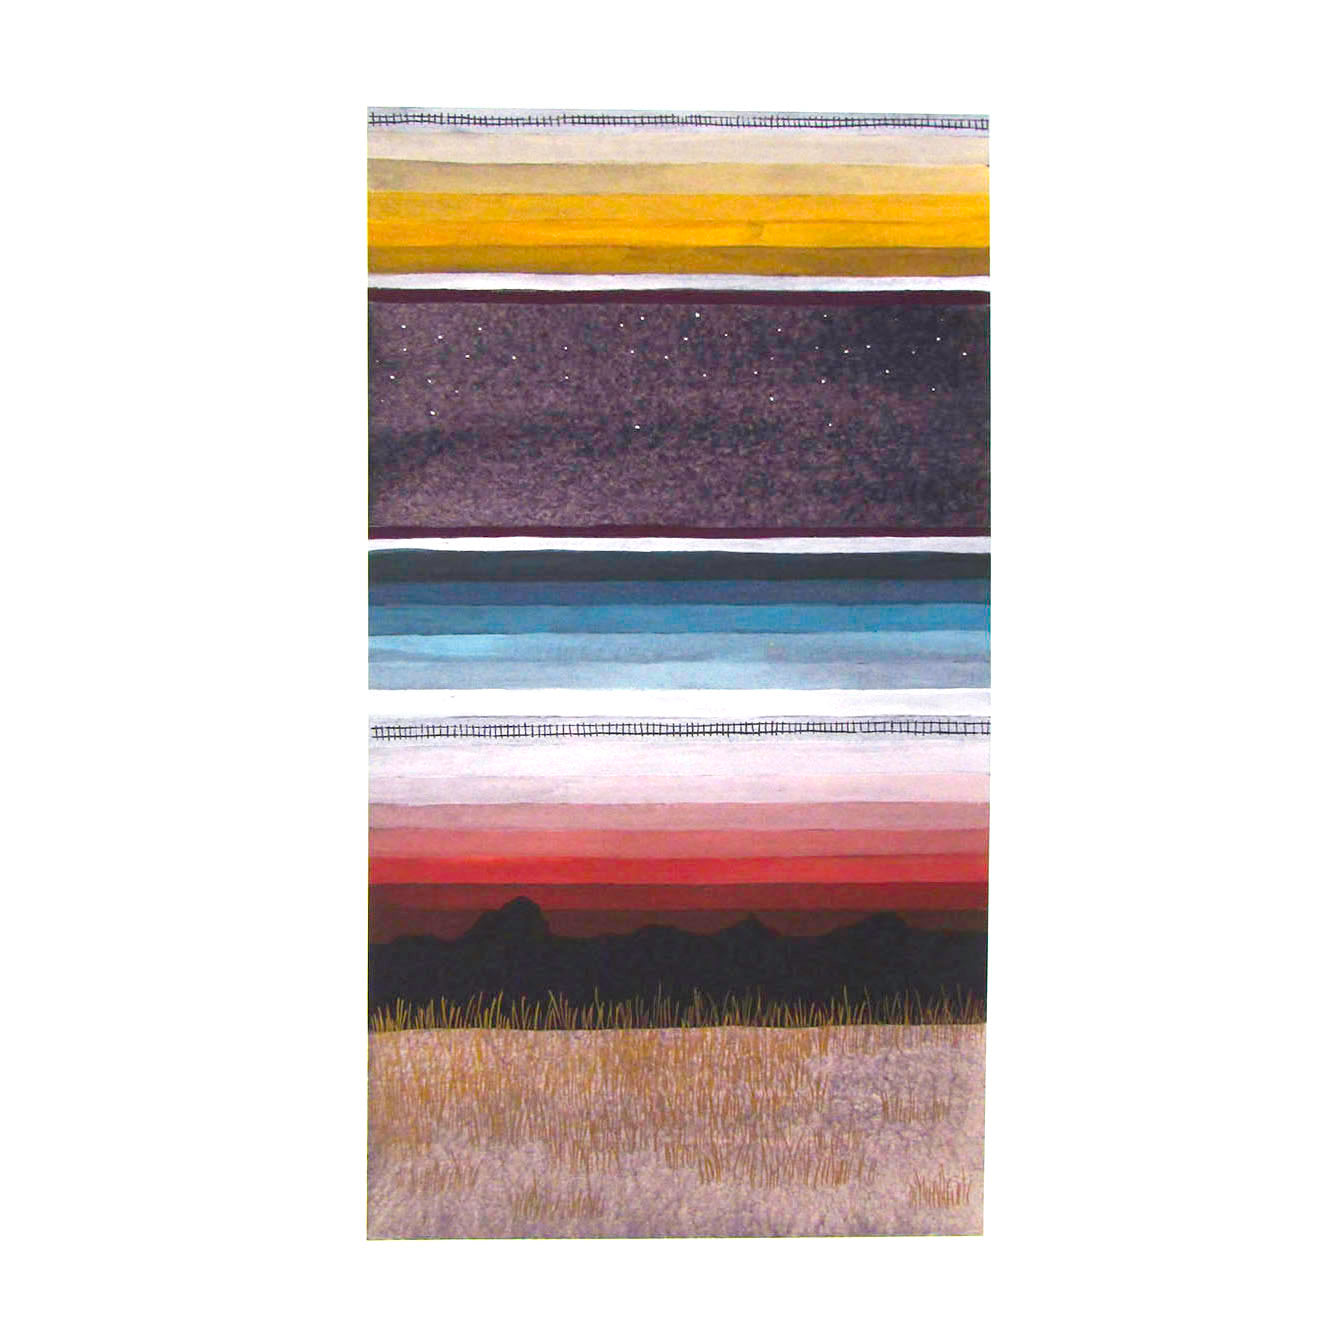 ART PRINT: Blanket Sky - by Heather Sundquist Hall